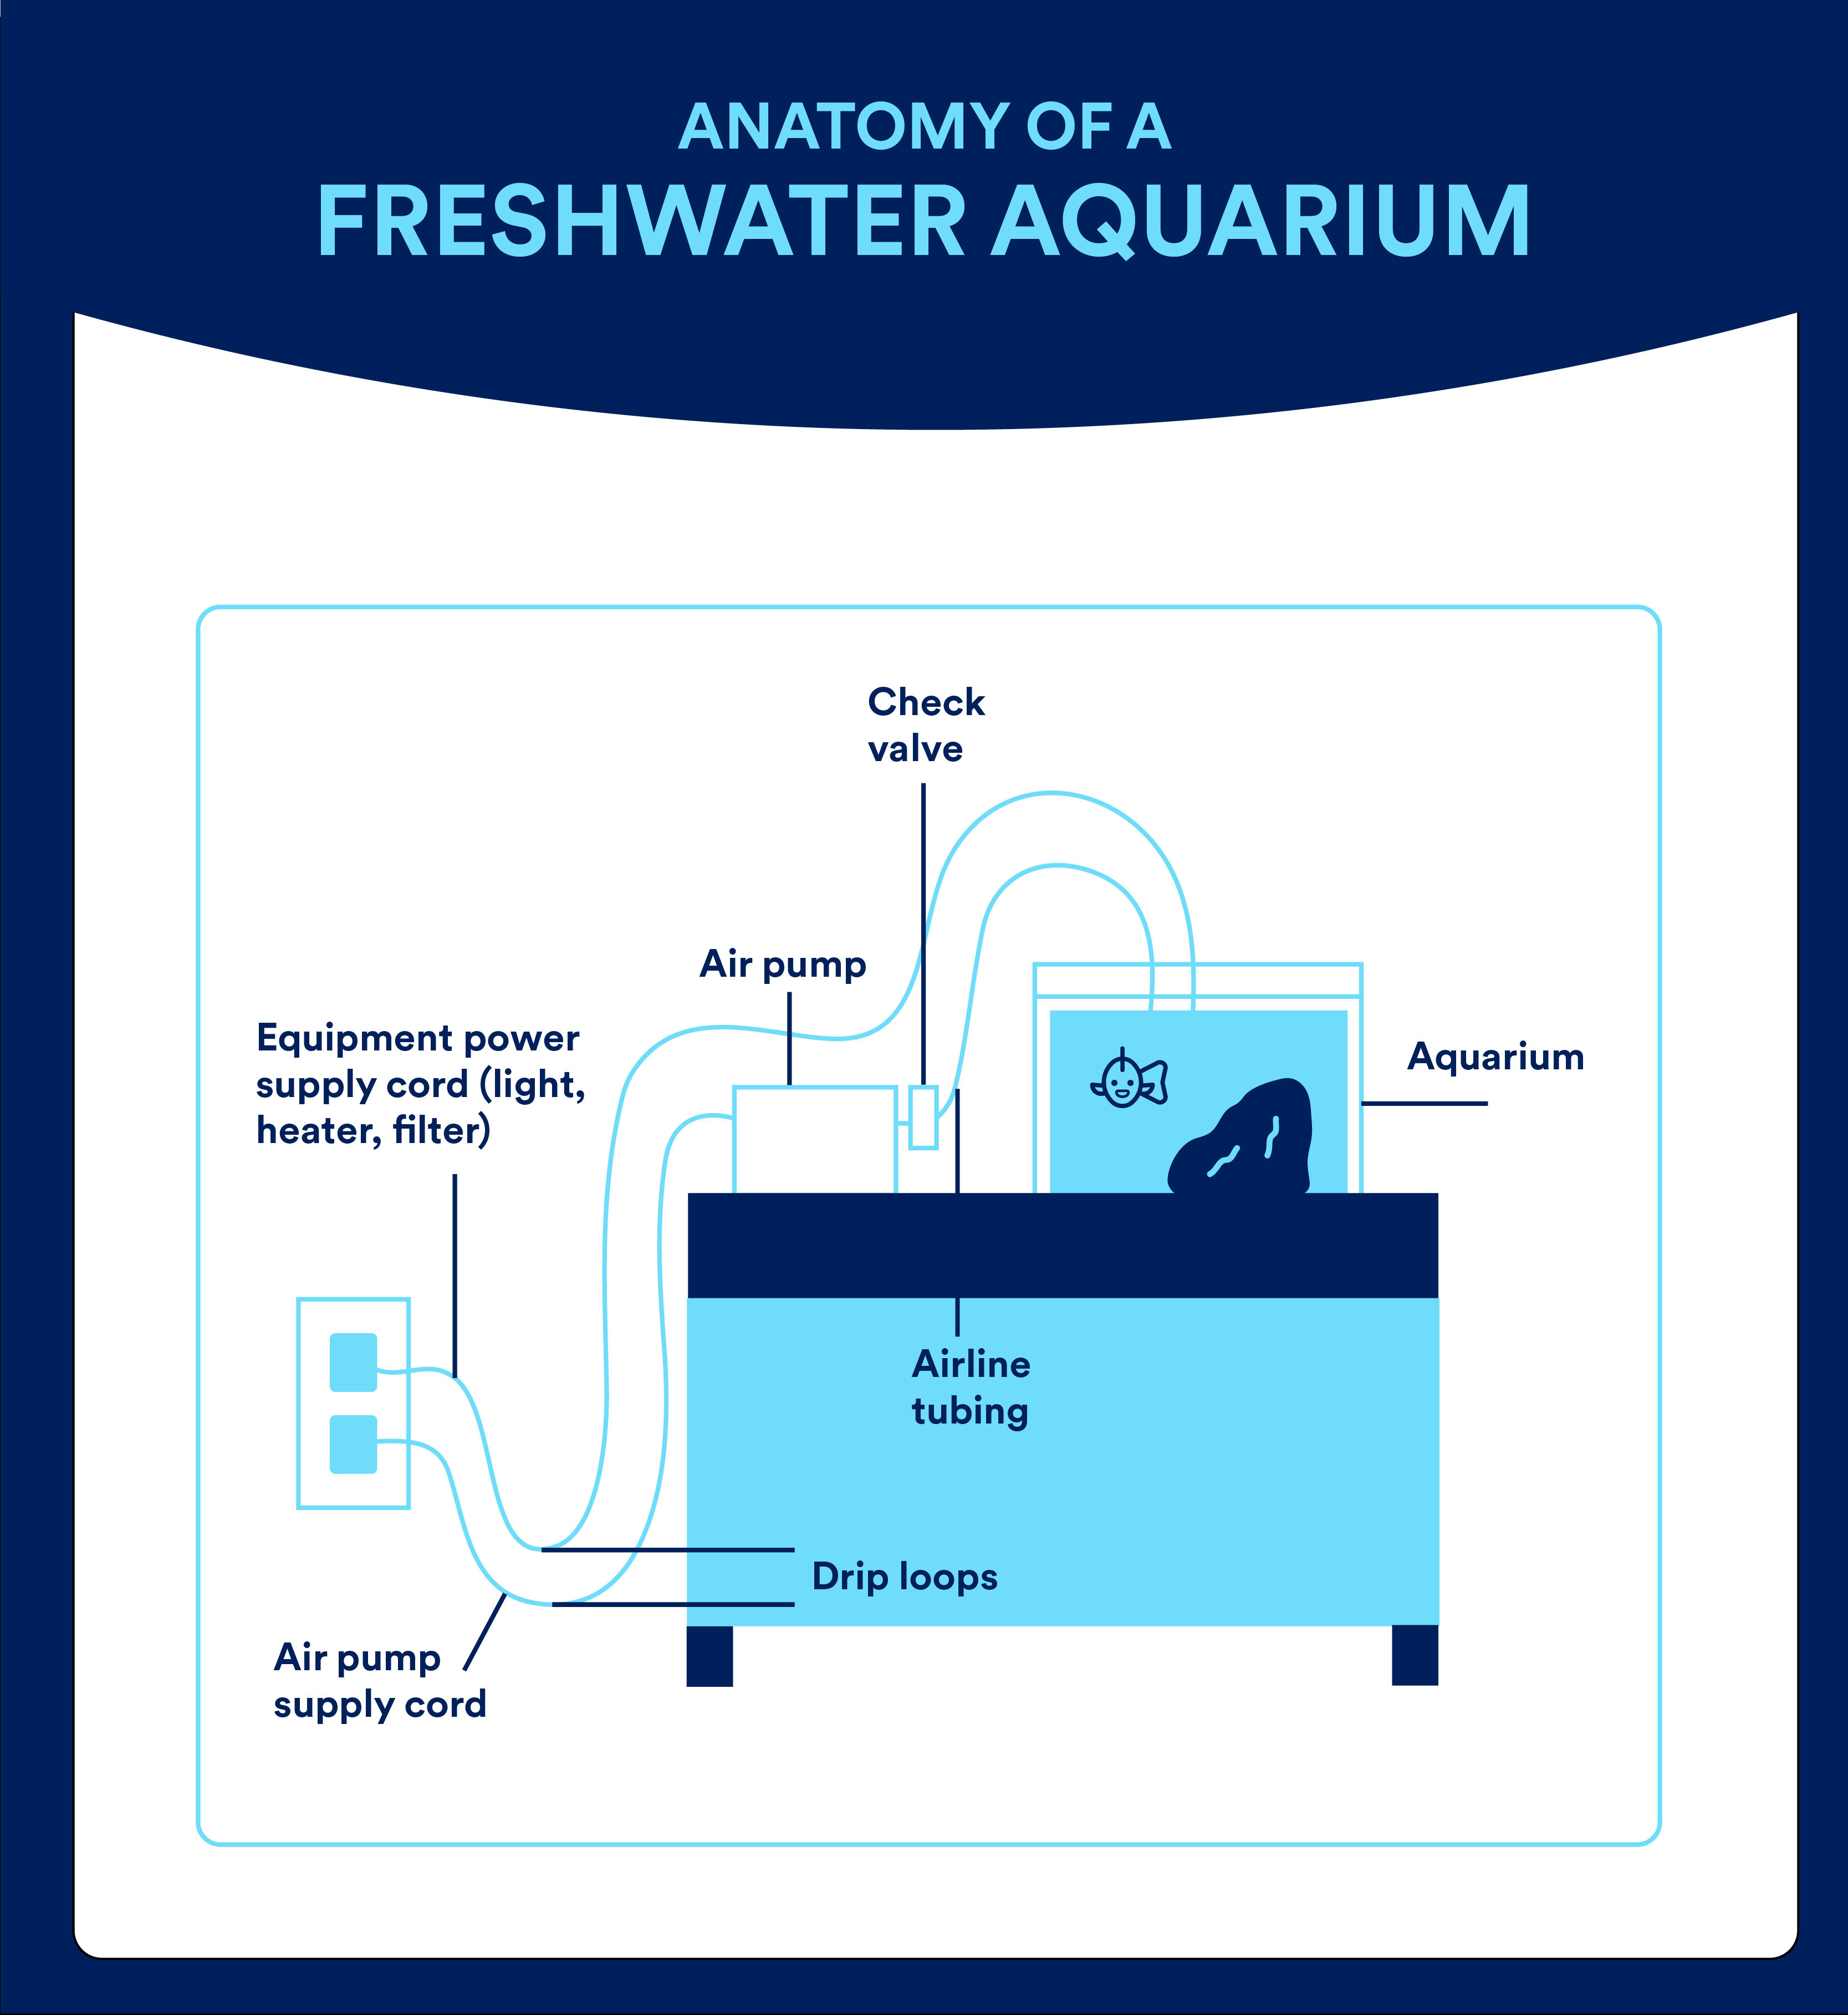 How to set up a freshwater aquarium | Image